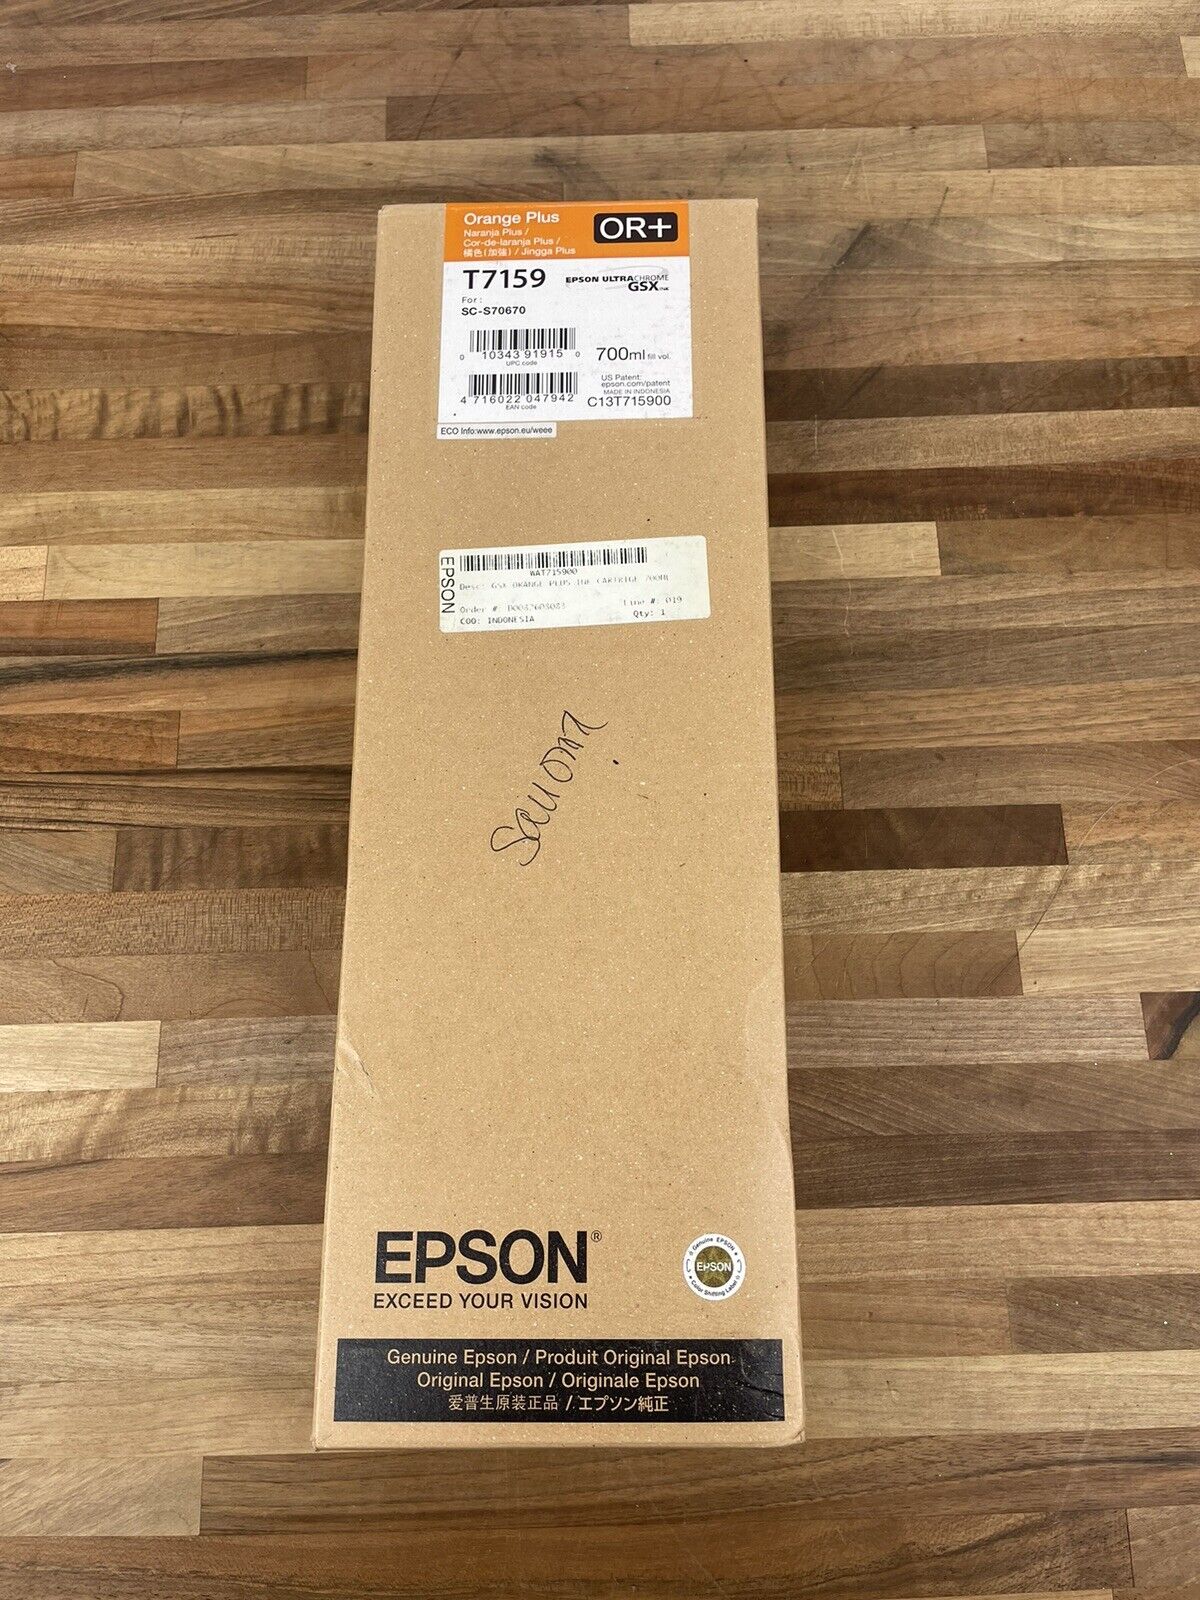 Expired Epson Ultra Chrome GSX Ink Orange Plus T7159 Genuine SC-S70670